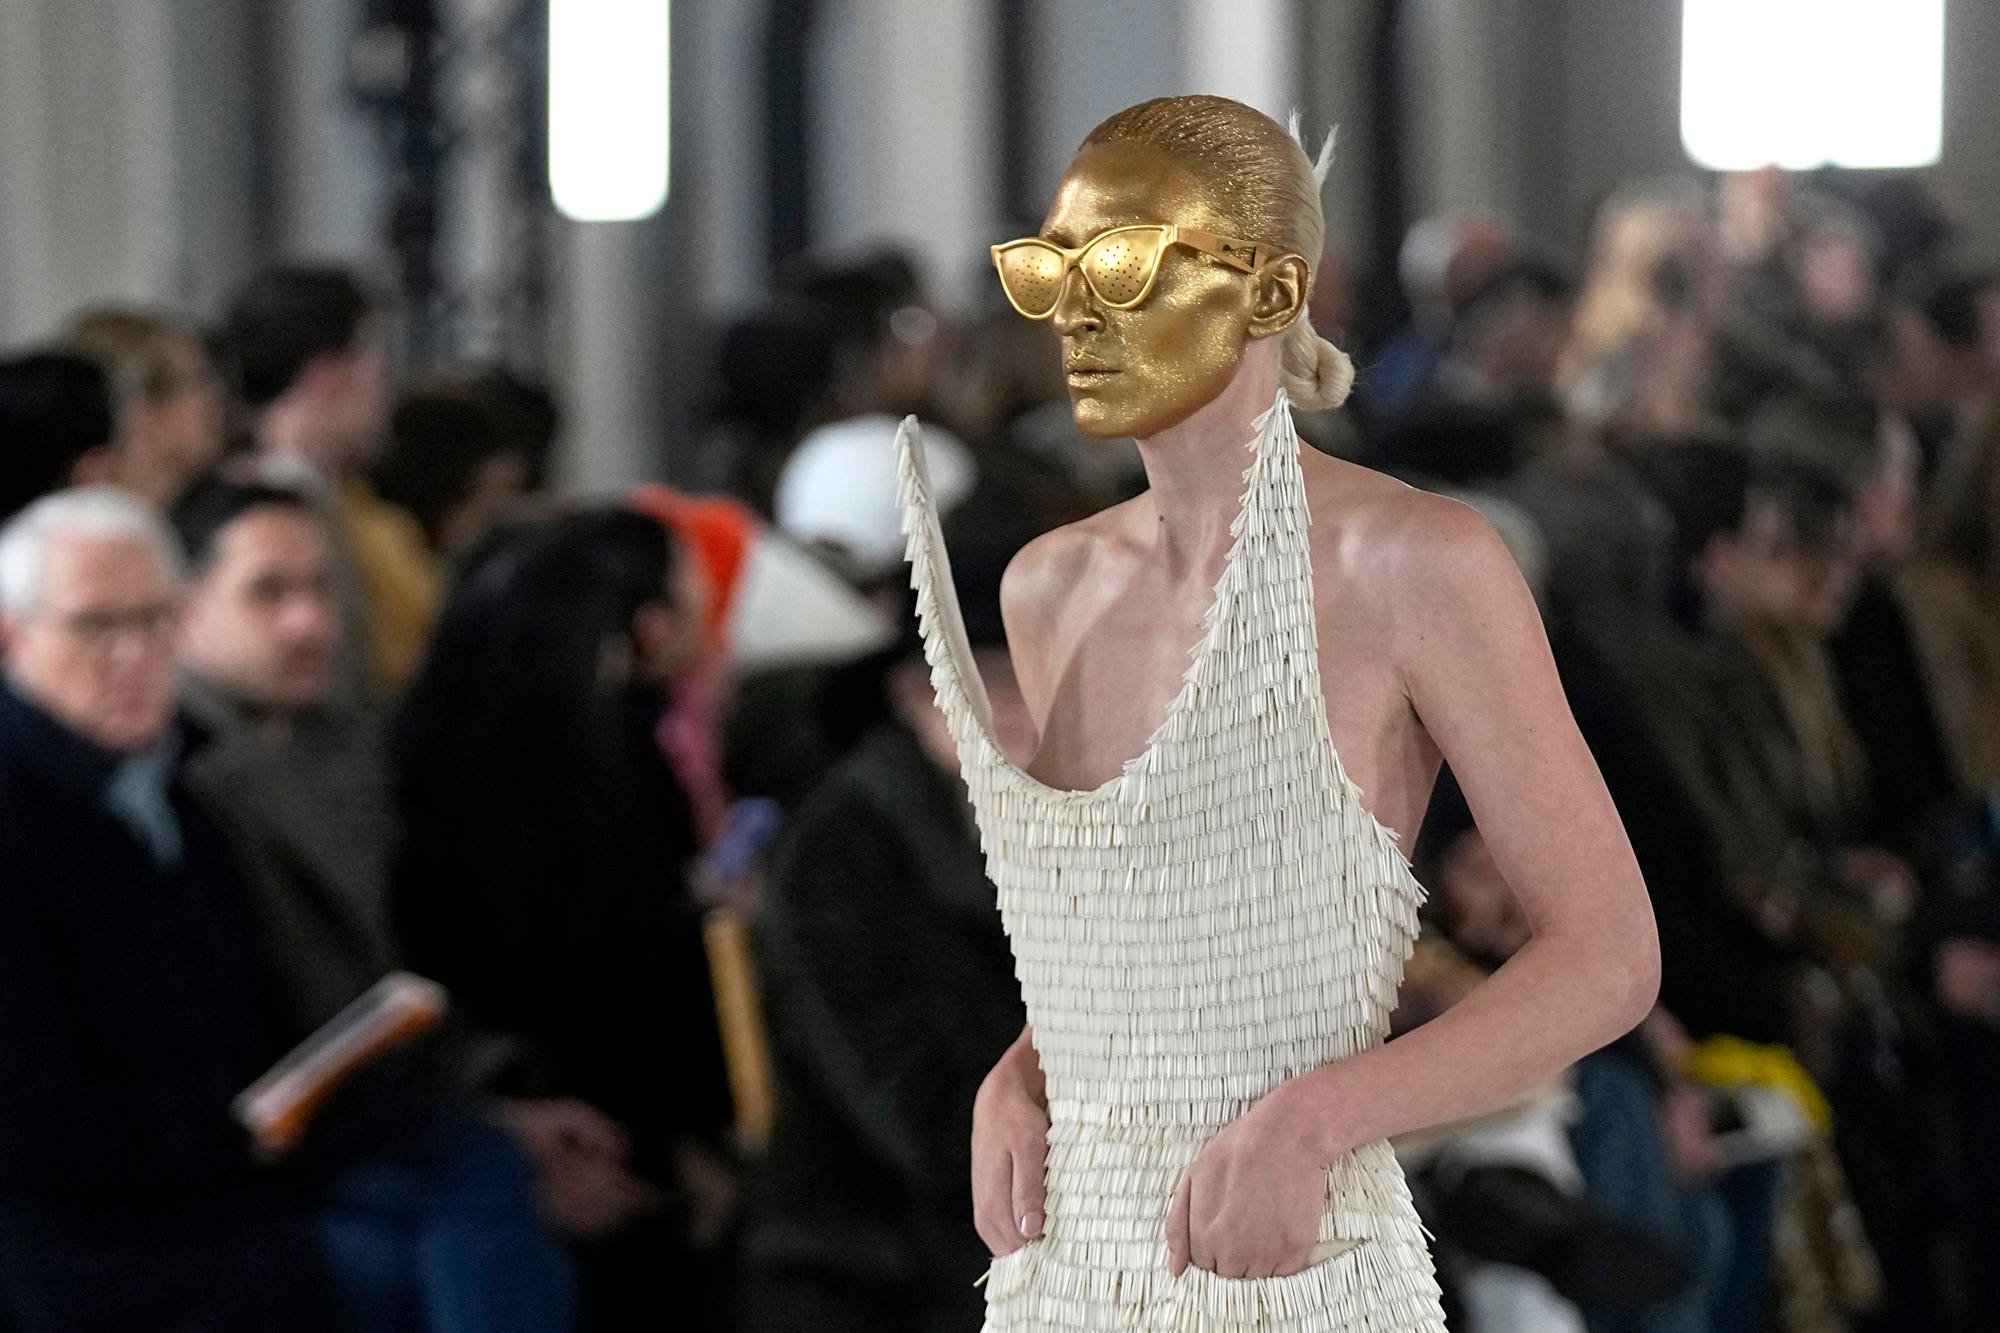 Paris Fashion Week 2023: 5 celebrities who made a stylish appearance